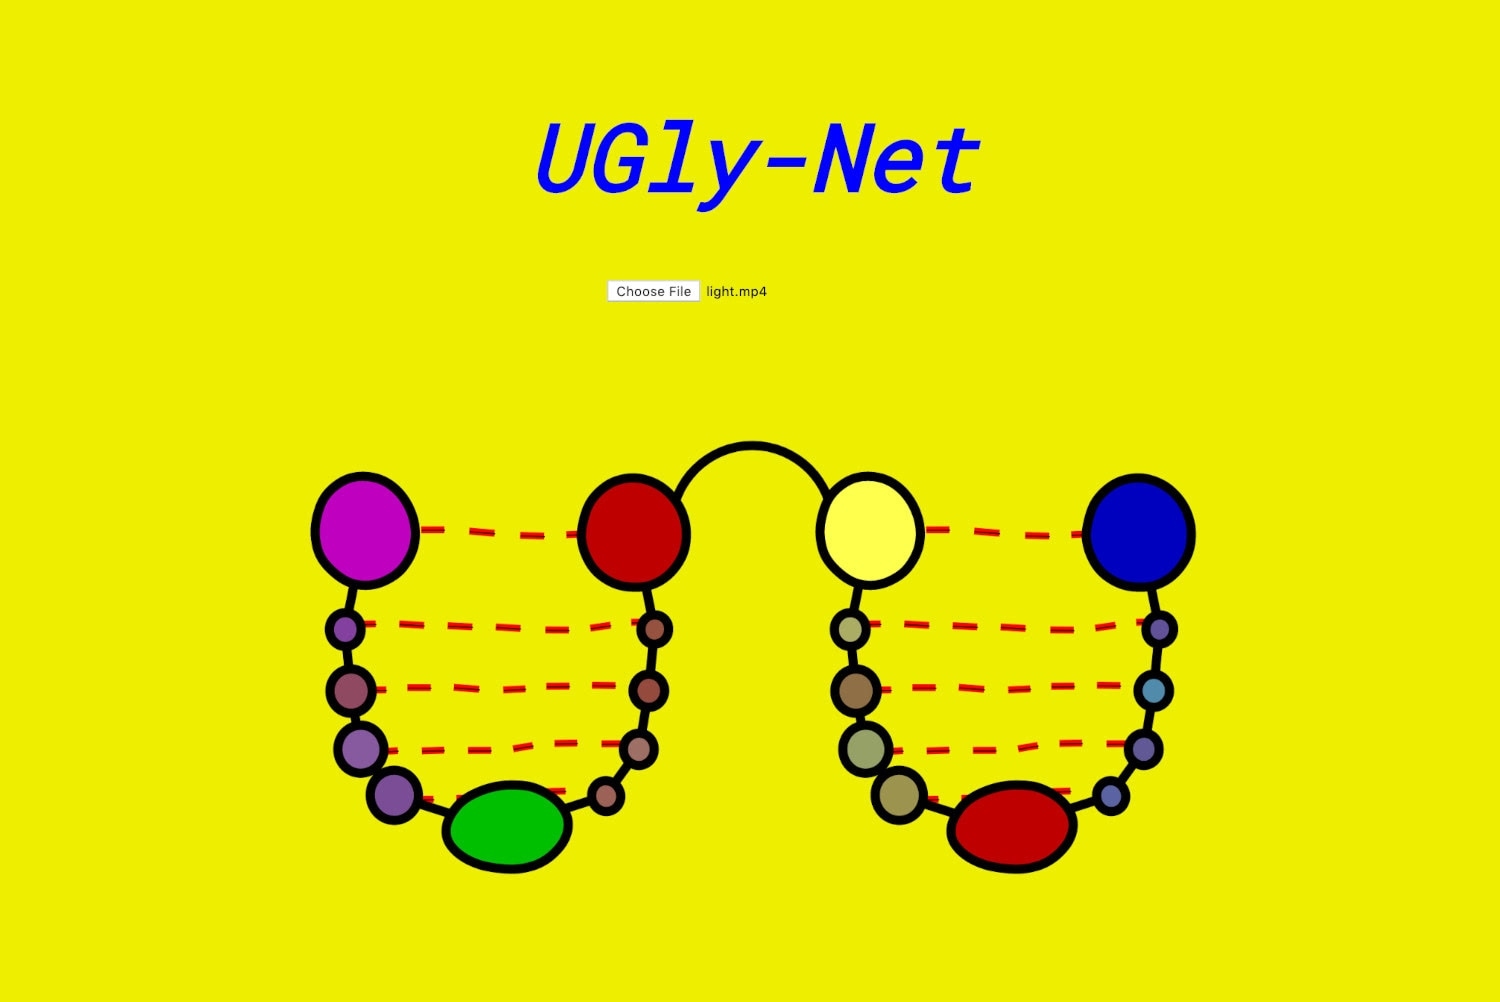 UGly-Net interface